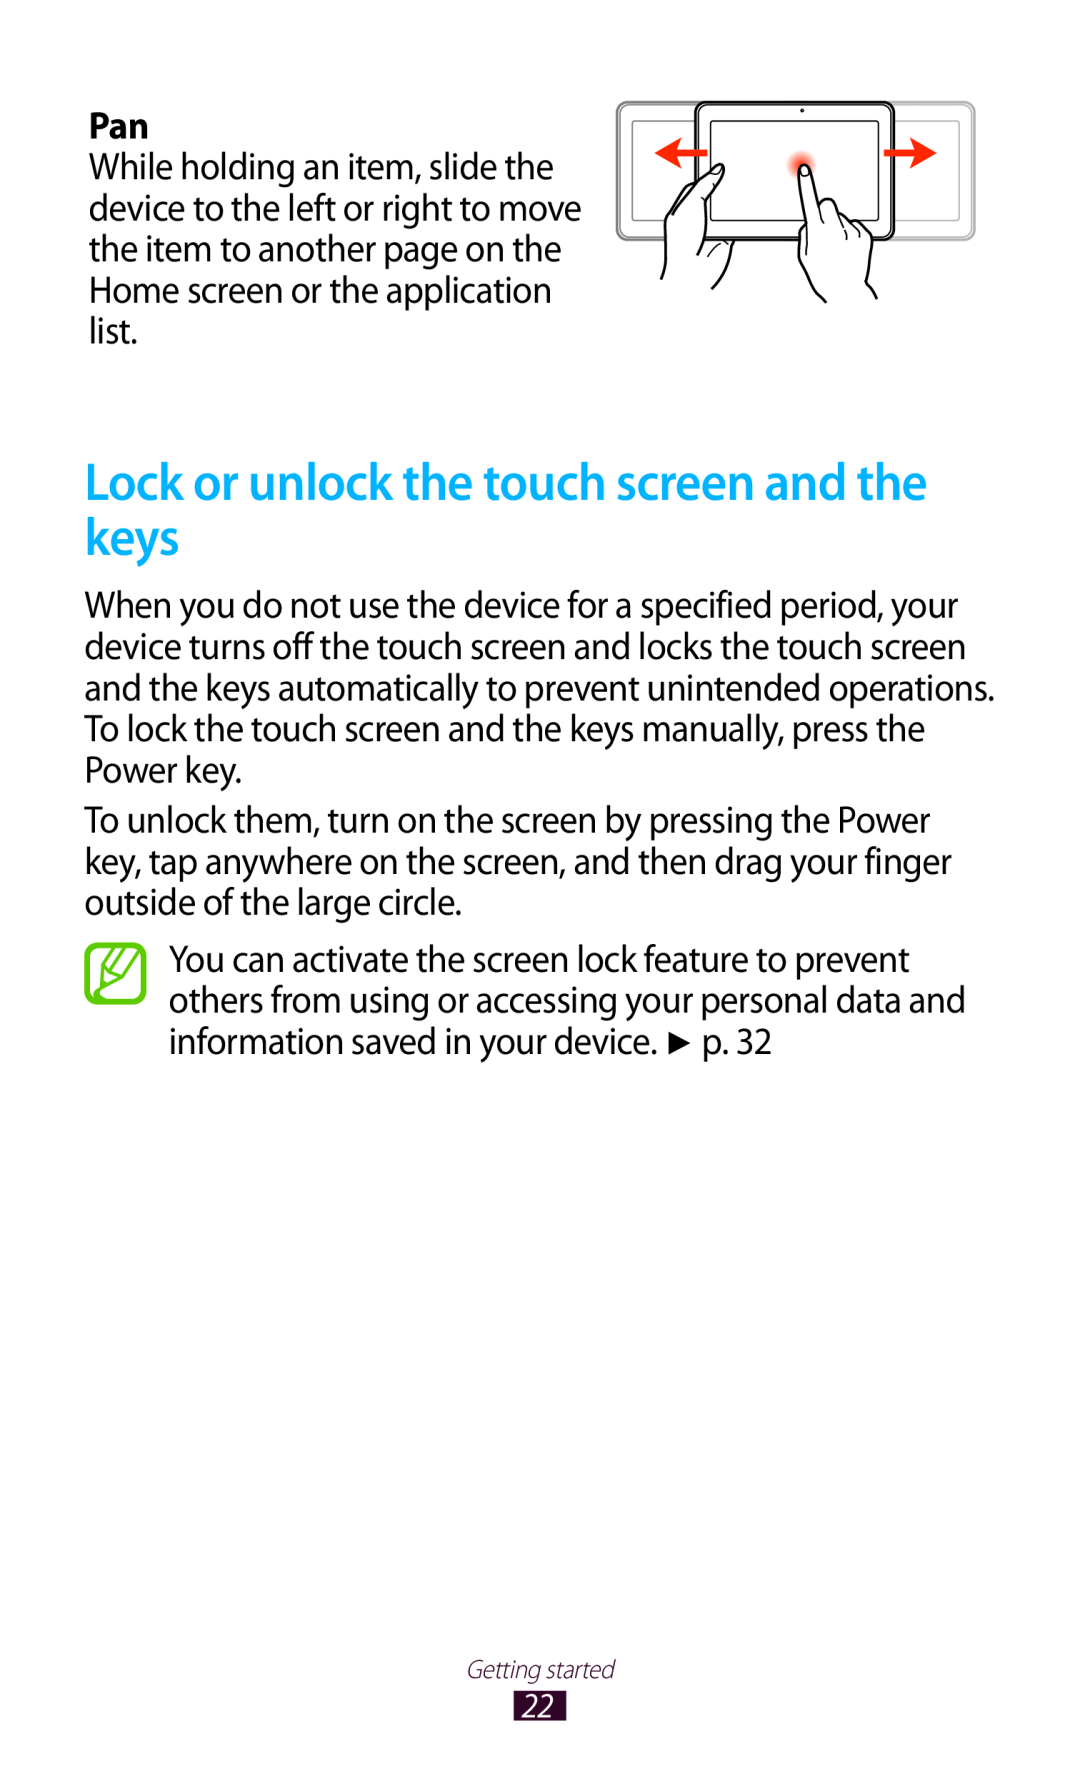 Samsung GT-P7500FKDDBT, GT-P7500UWEDBT, GT-P7500FKAATO, GT-P7500FKDVD2 manual Lock or unlock the touch screen and the keys 